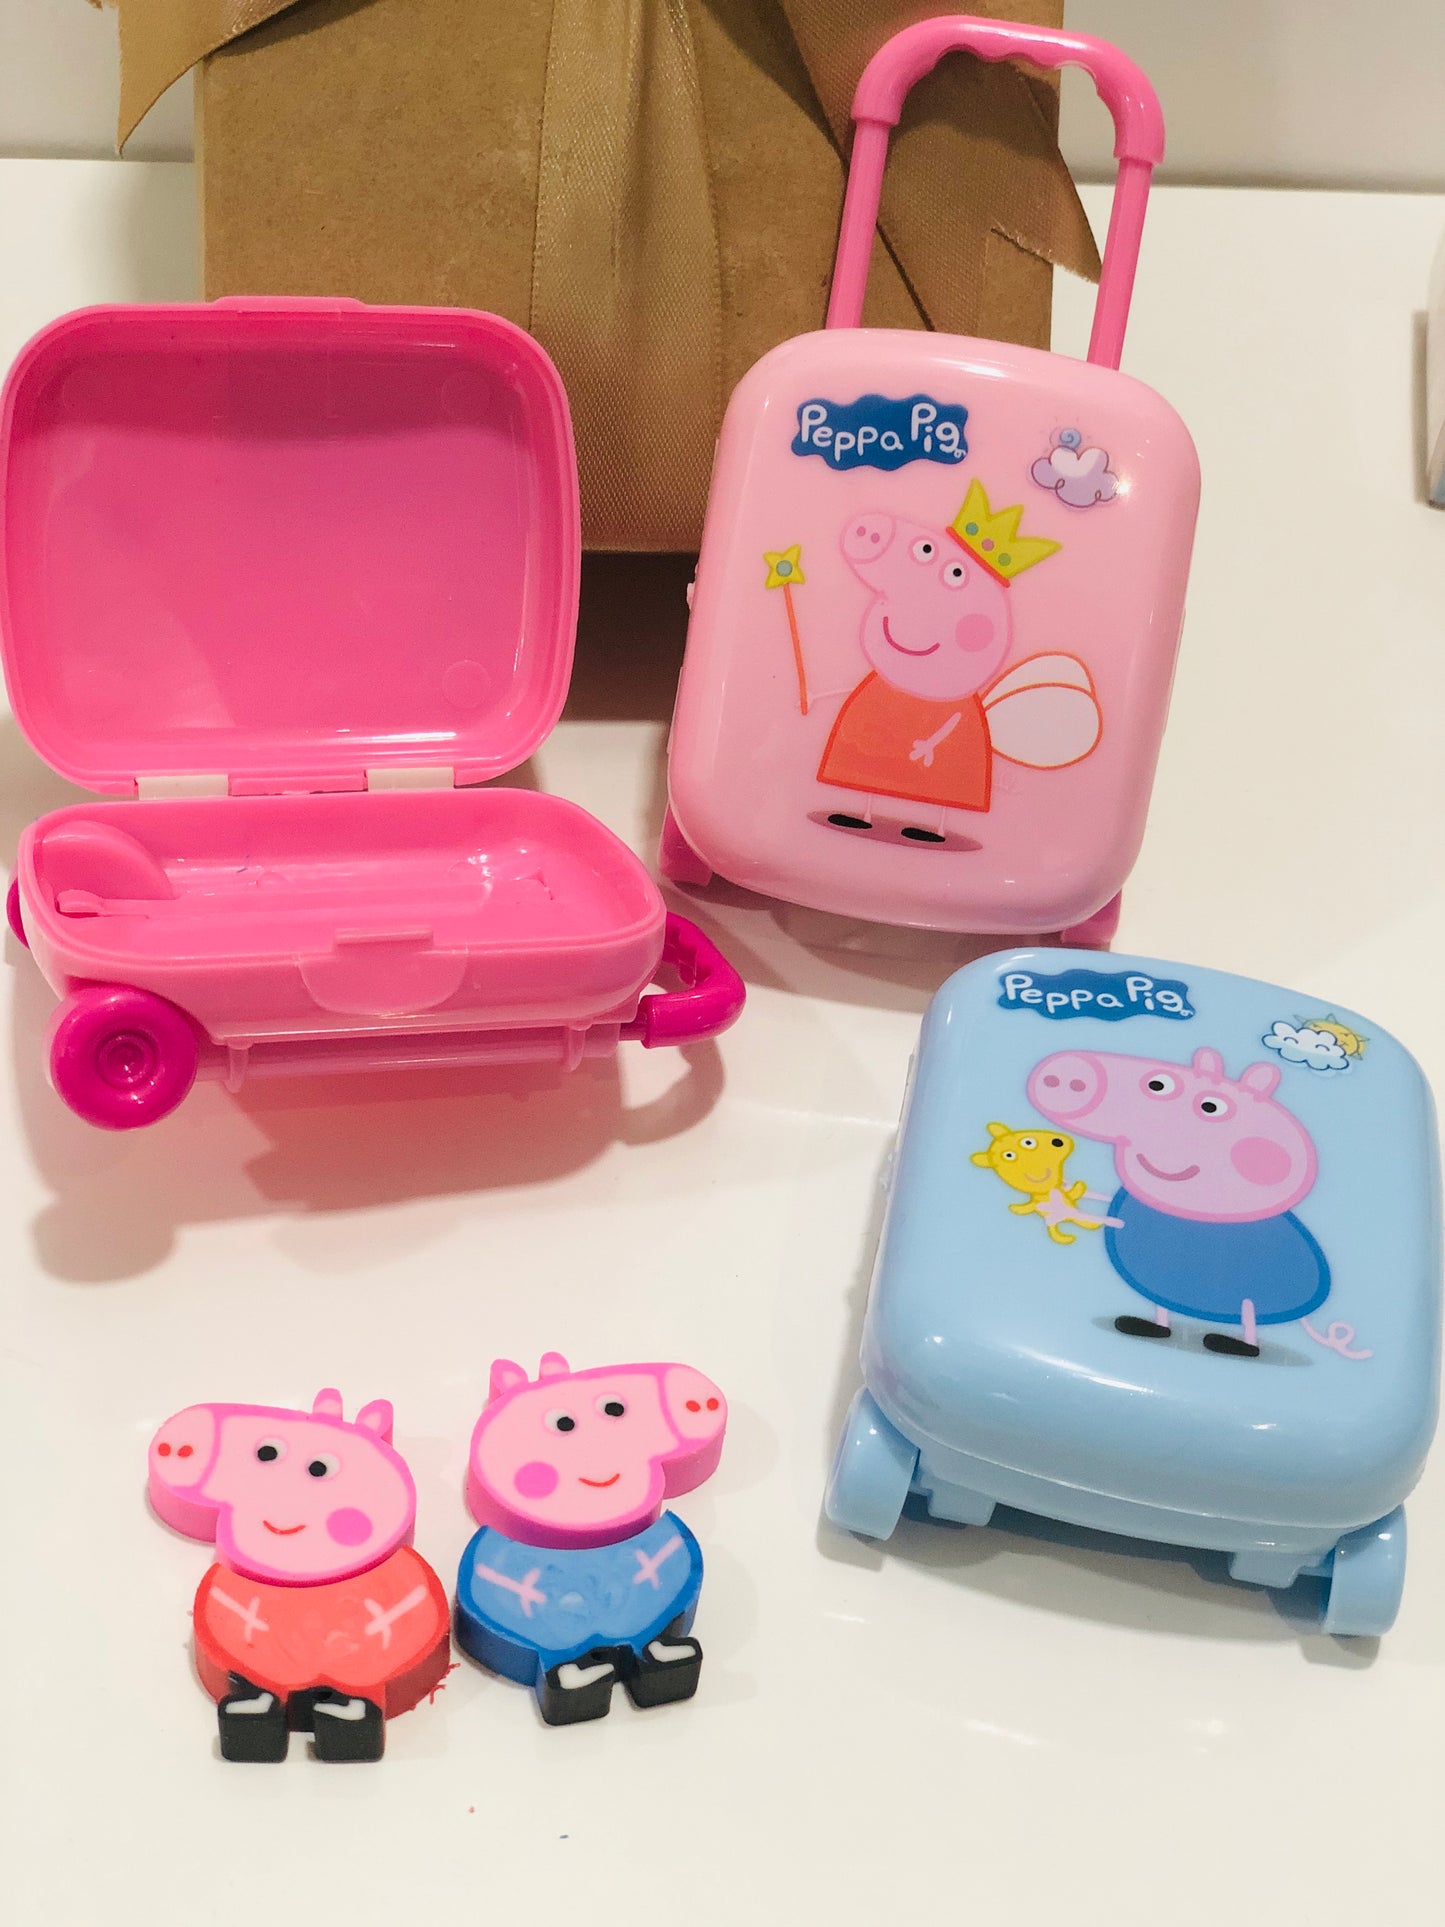 Peppa Pig Erasers in Suitcase Trolley